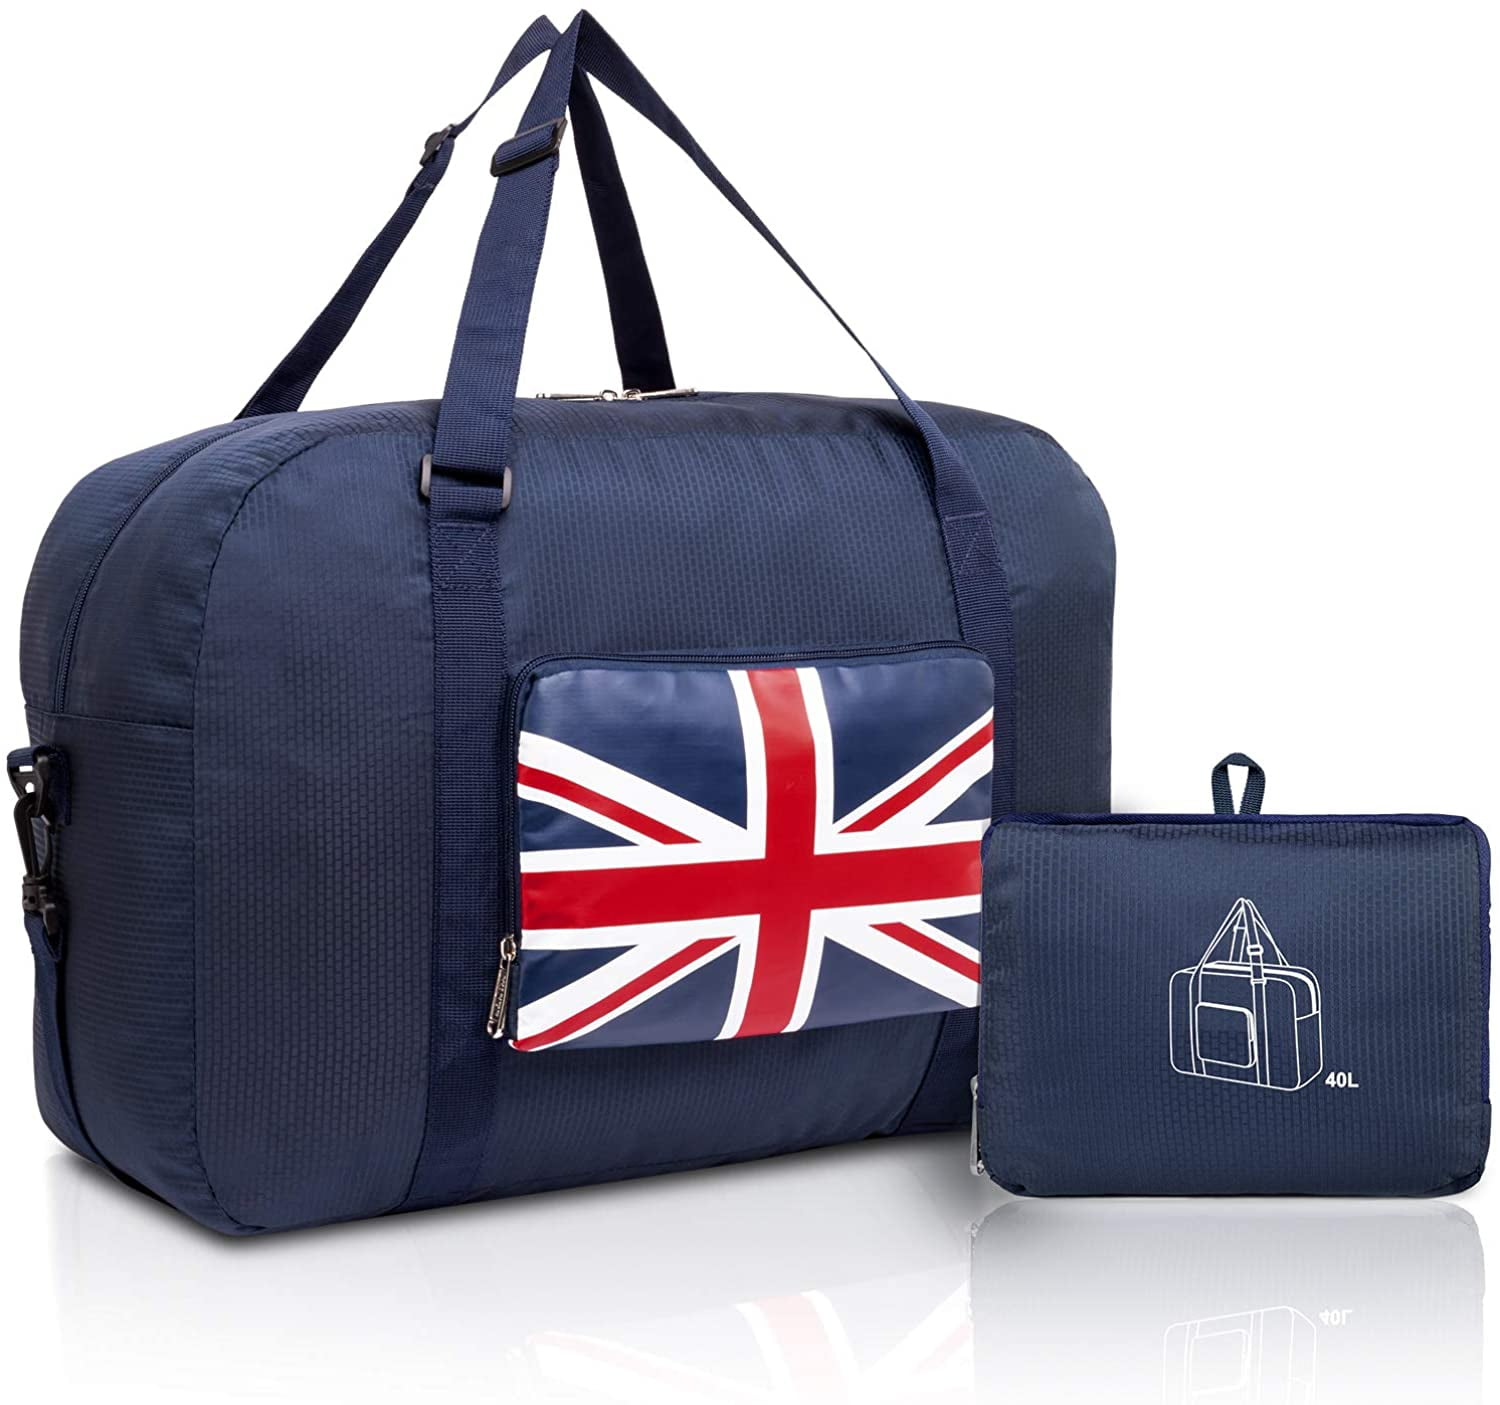 Wandf Foldable Travel Duffel Bag Luggage Sports Gym Water Resistant Nylon 